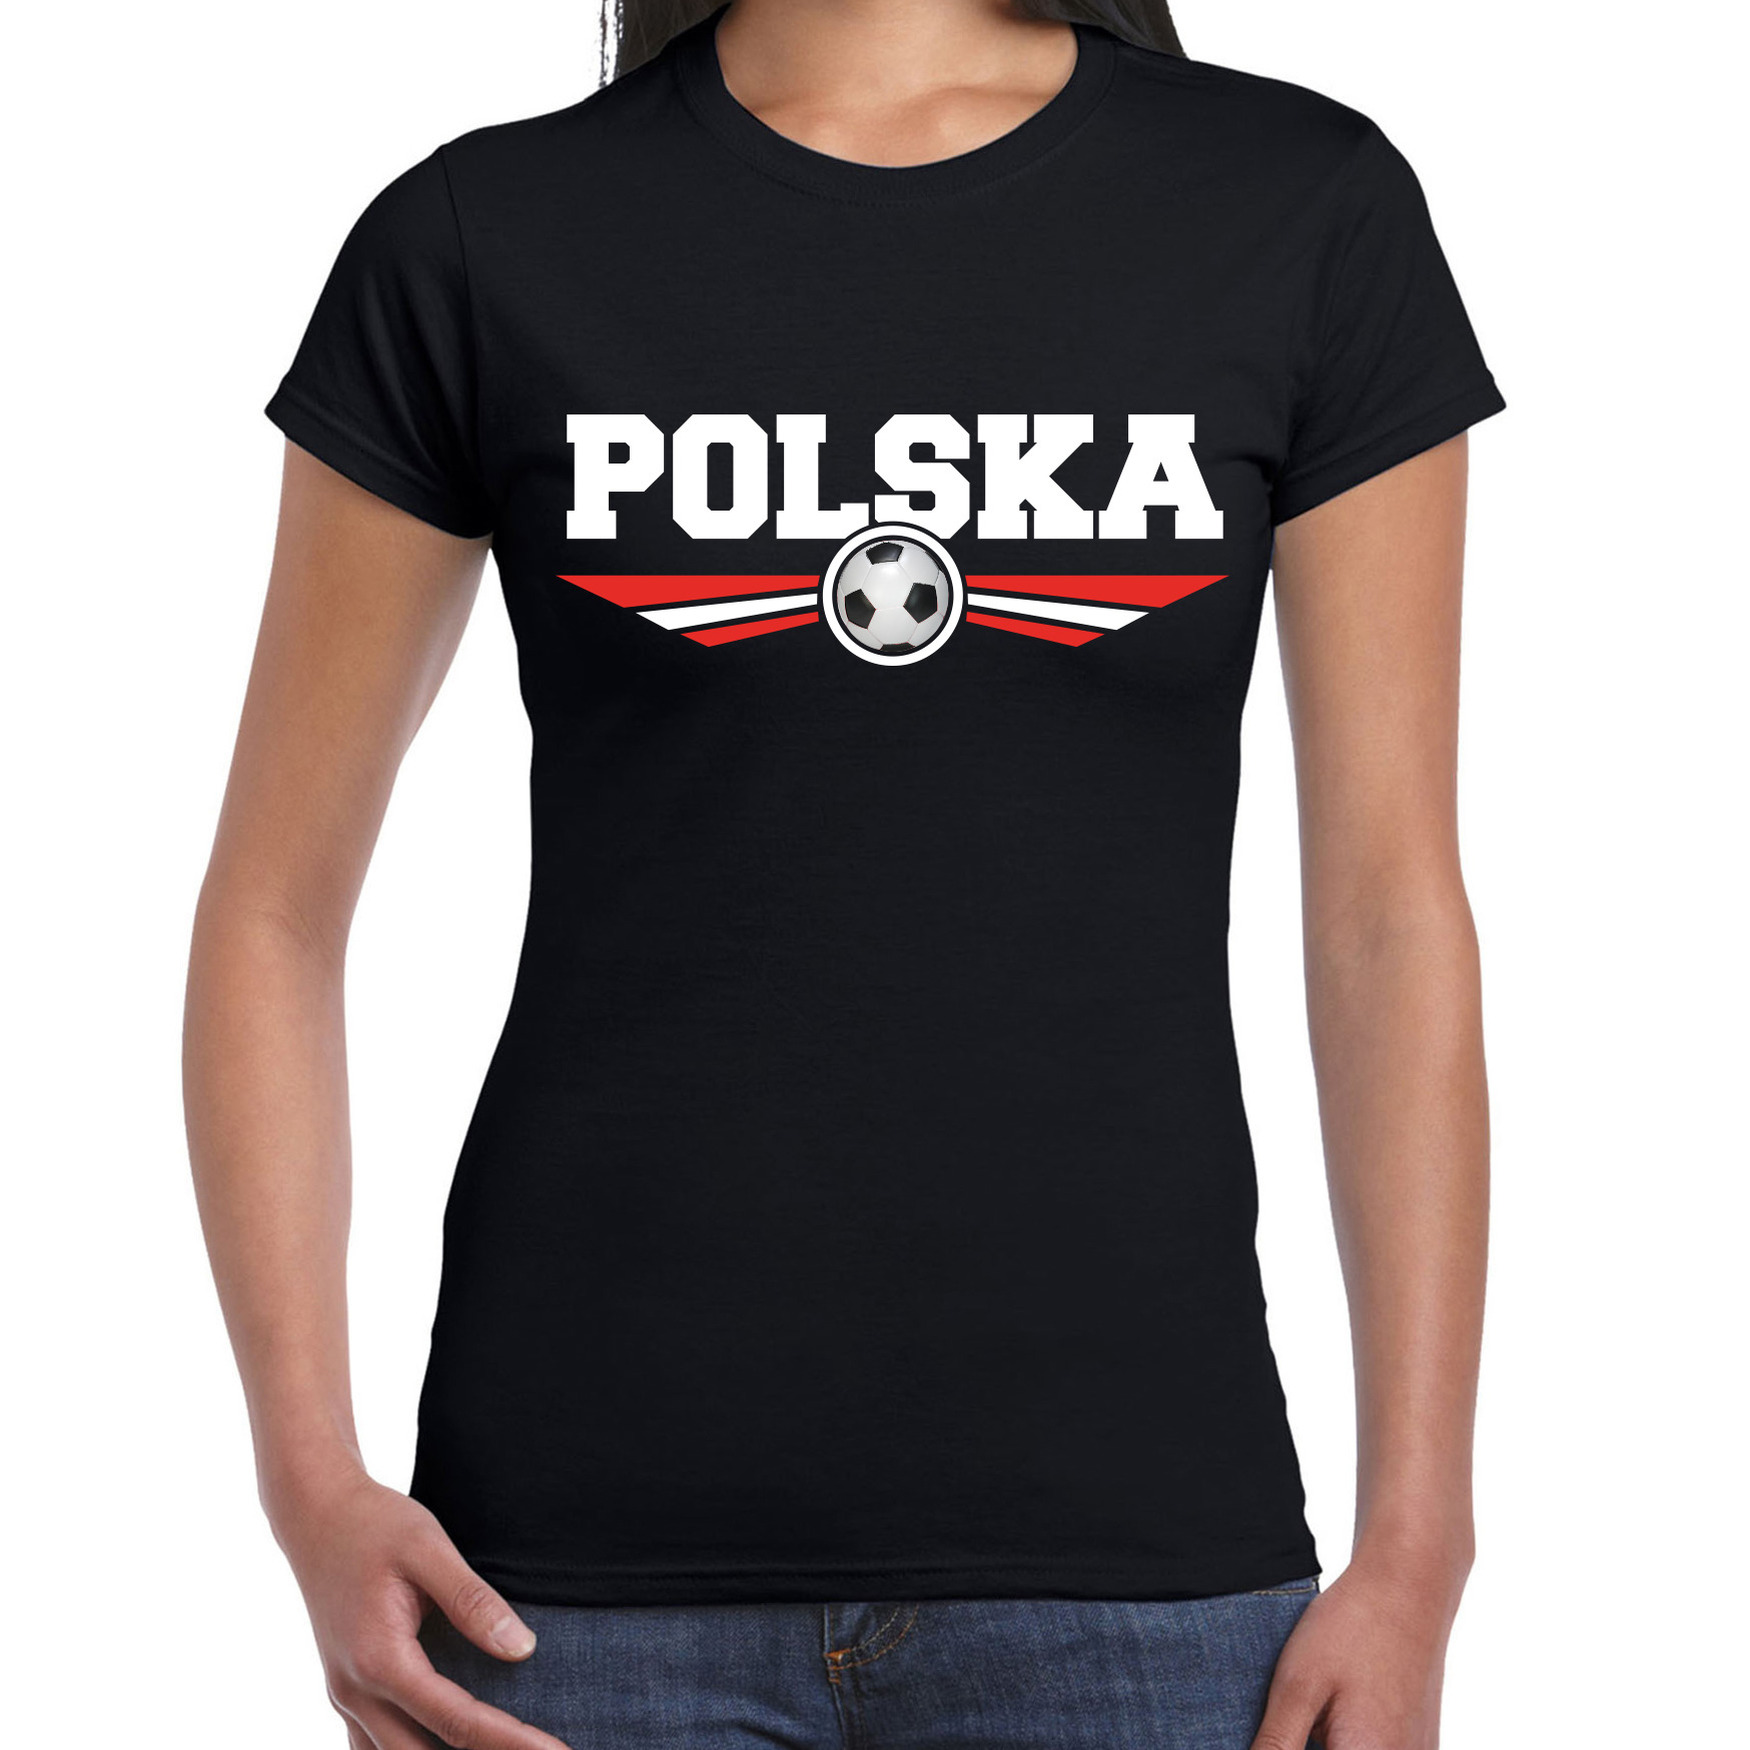 Polen-Polska landen-voetbal t-shirt zwart dames